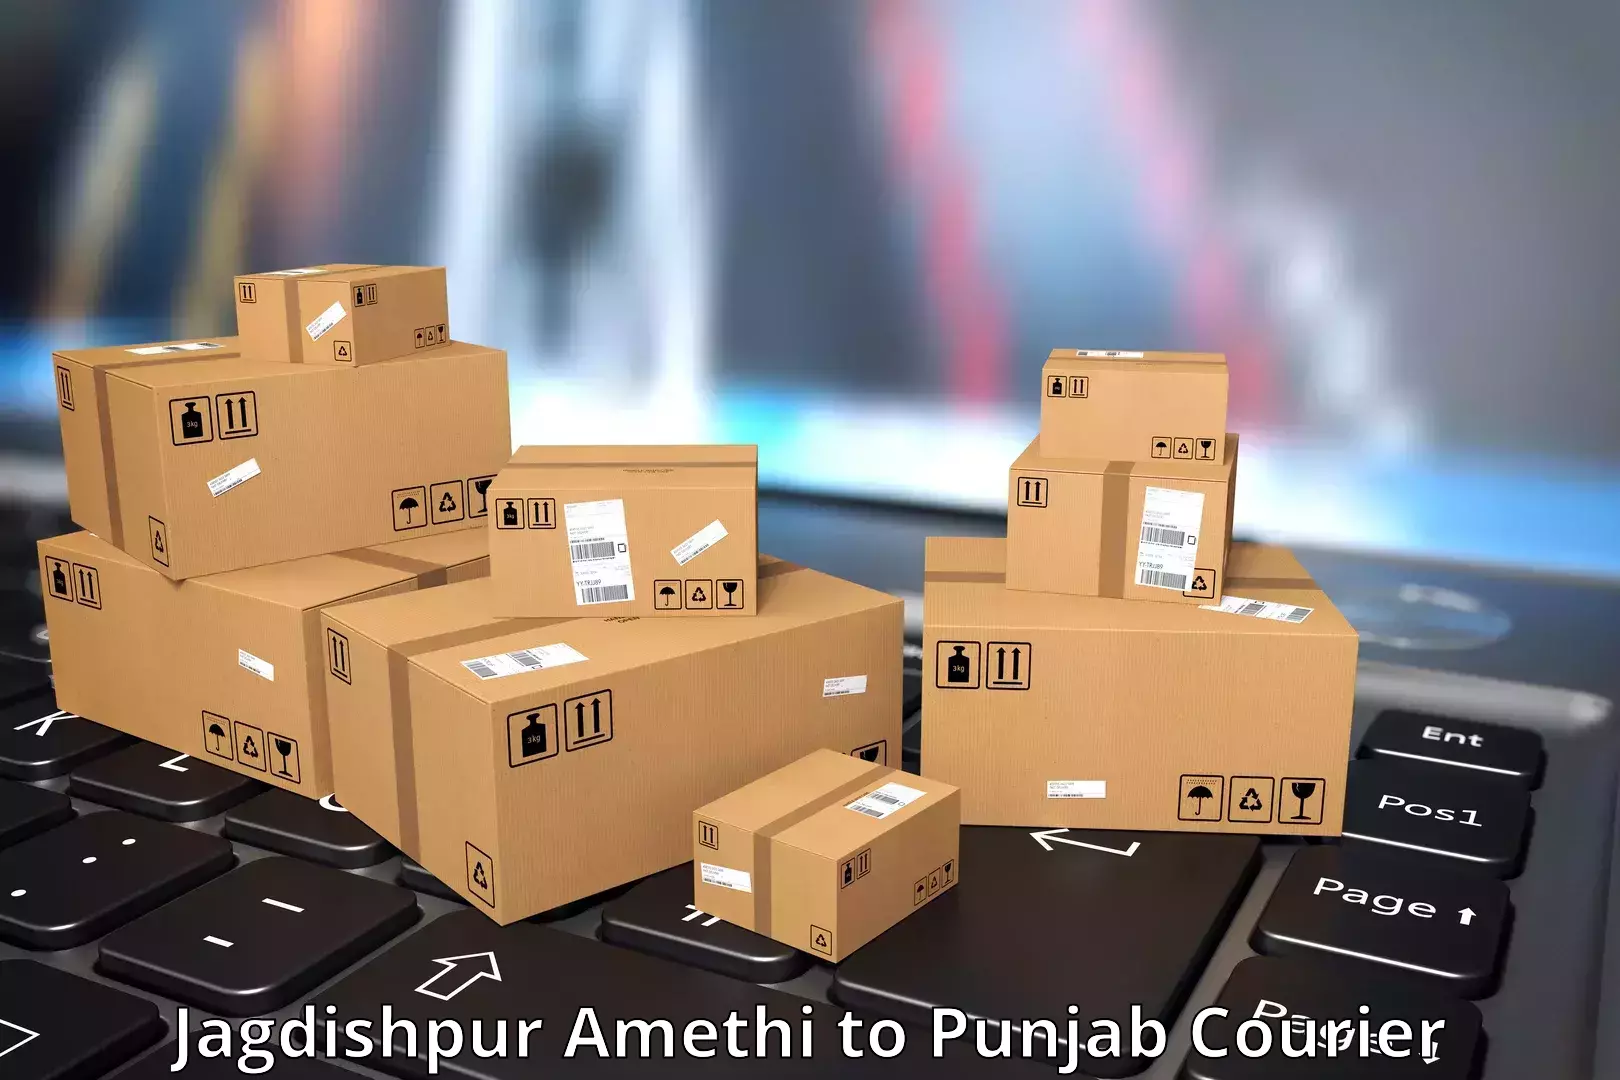 Express courier facilities in Jagdishpur Amethi to Faridkot